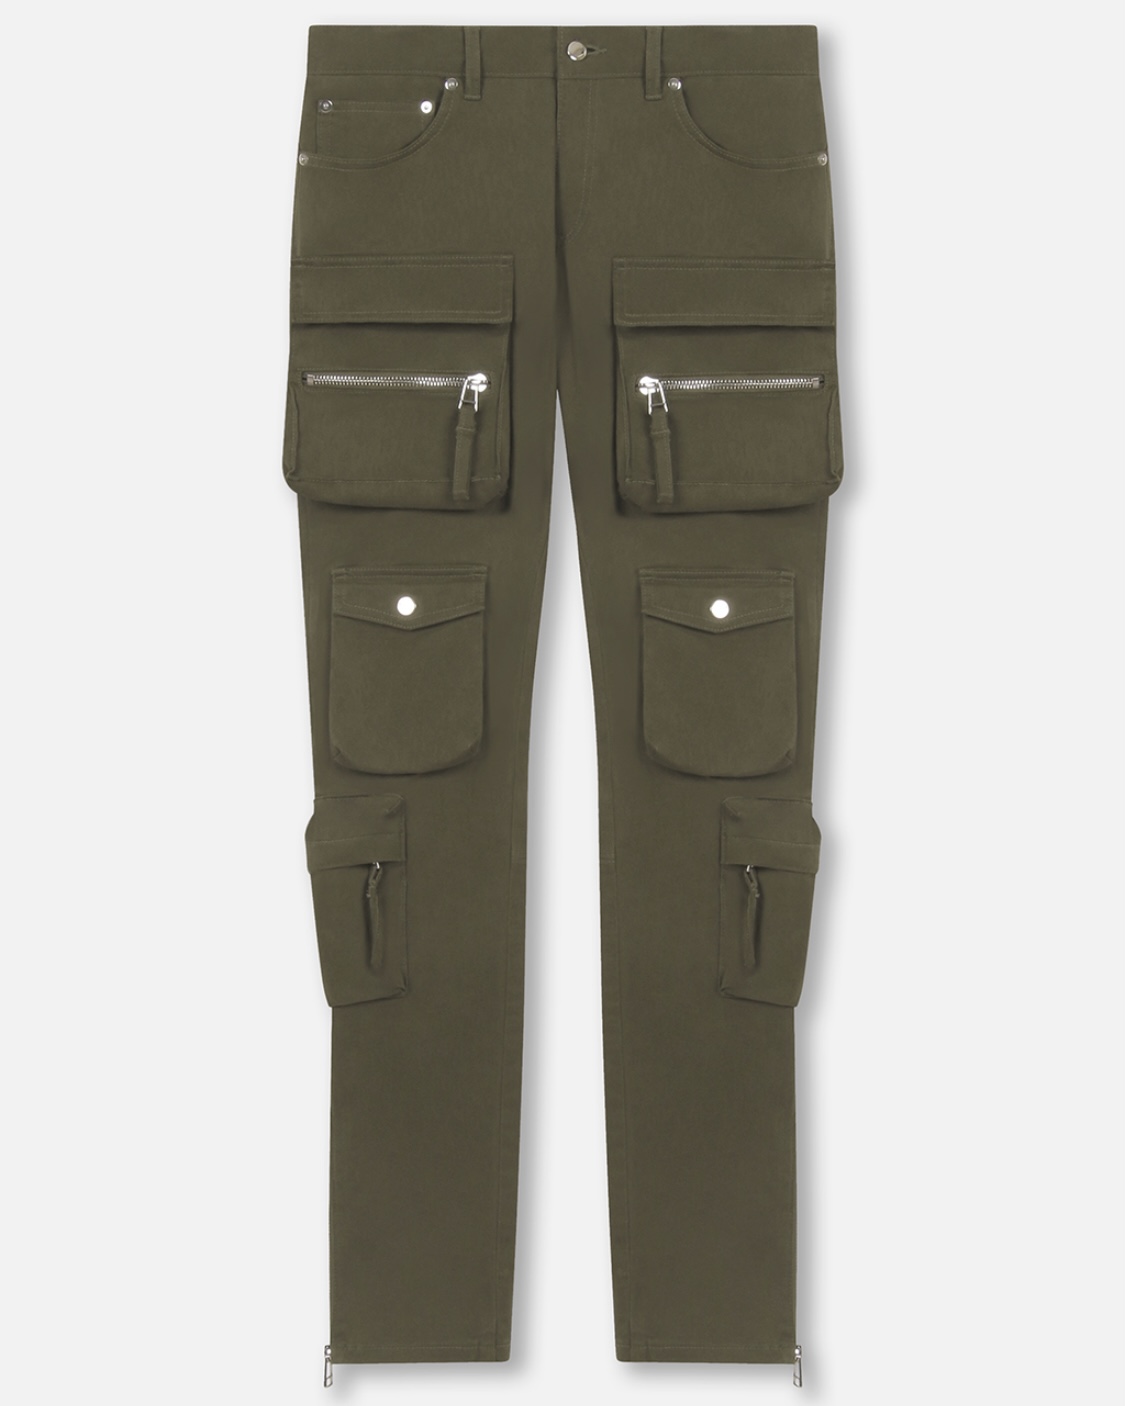 MLVINCE®︎ / type-2 slim cargo pants - OTHELLO KUMAMOTO